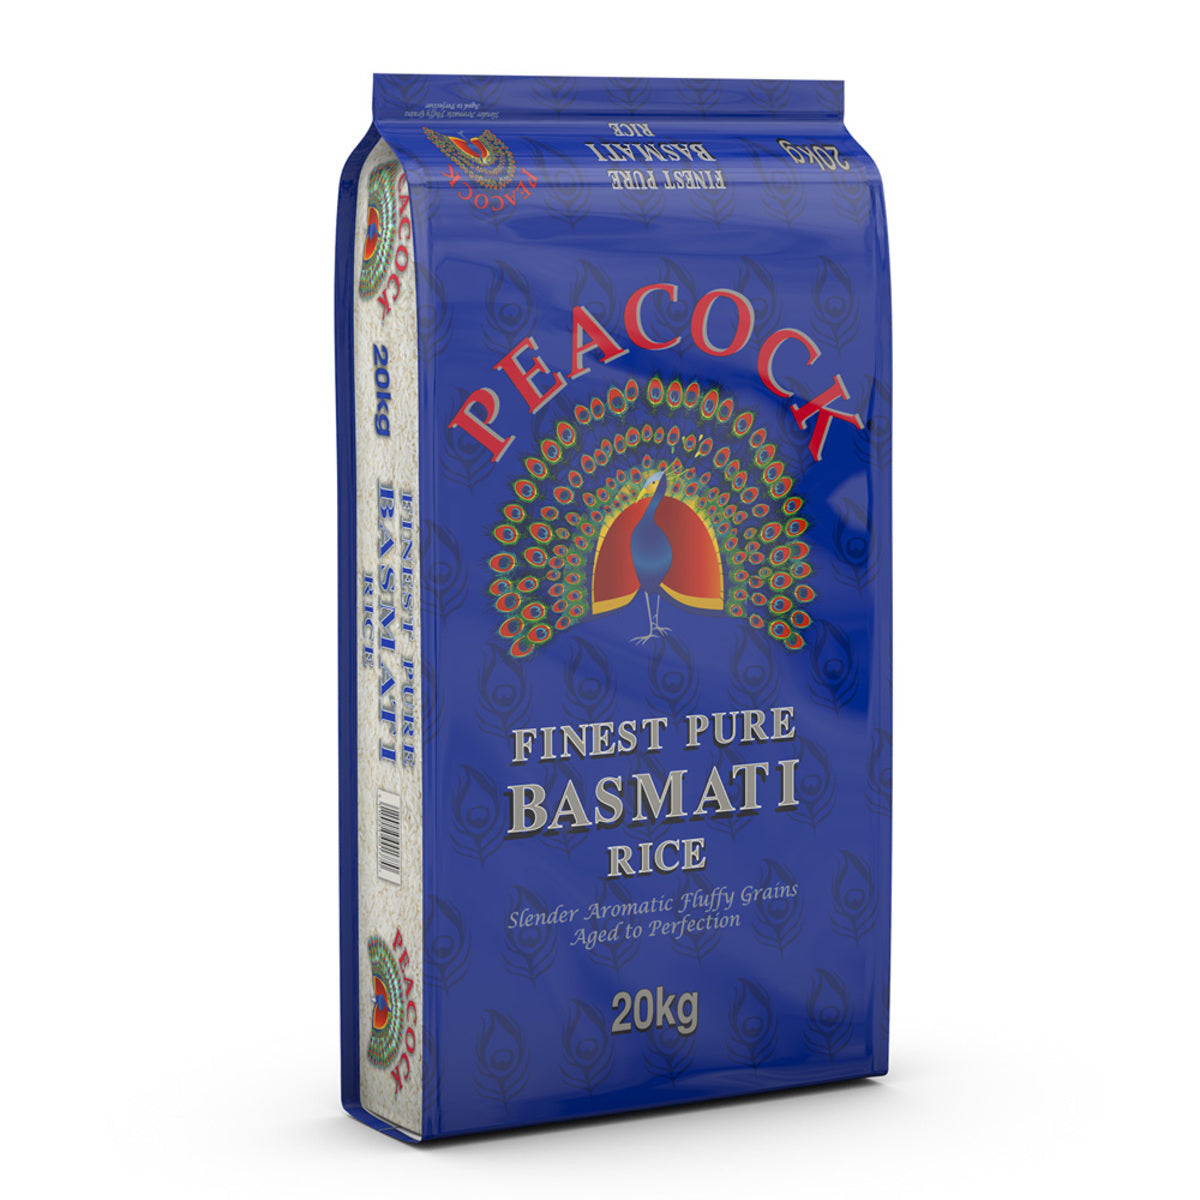 Peacock Finest Pure Basmati Rice, 20kg - McGrocer